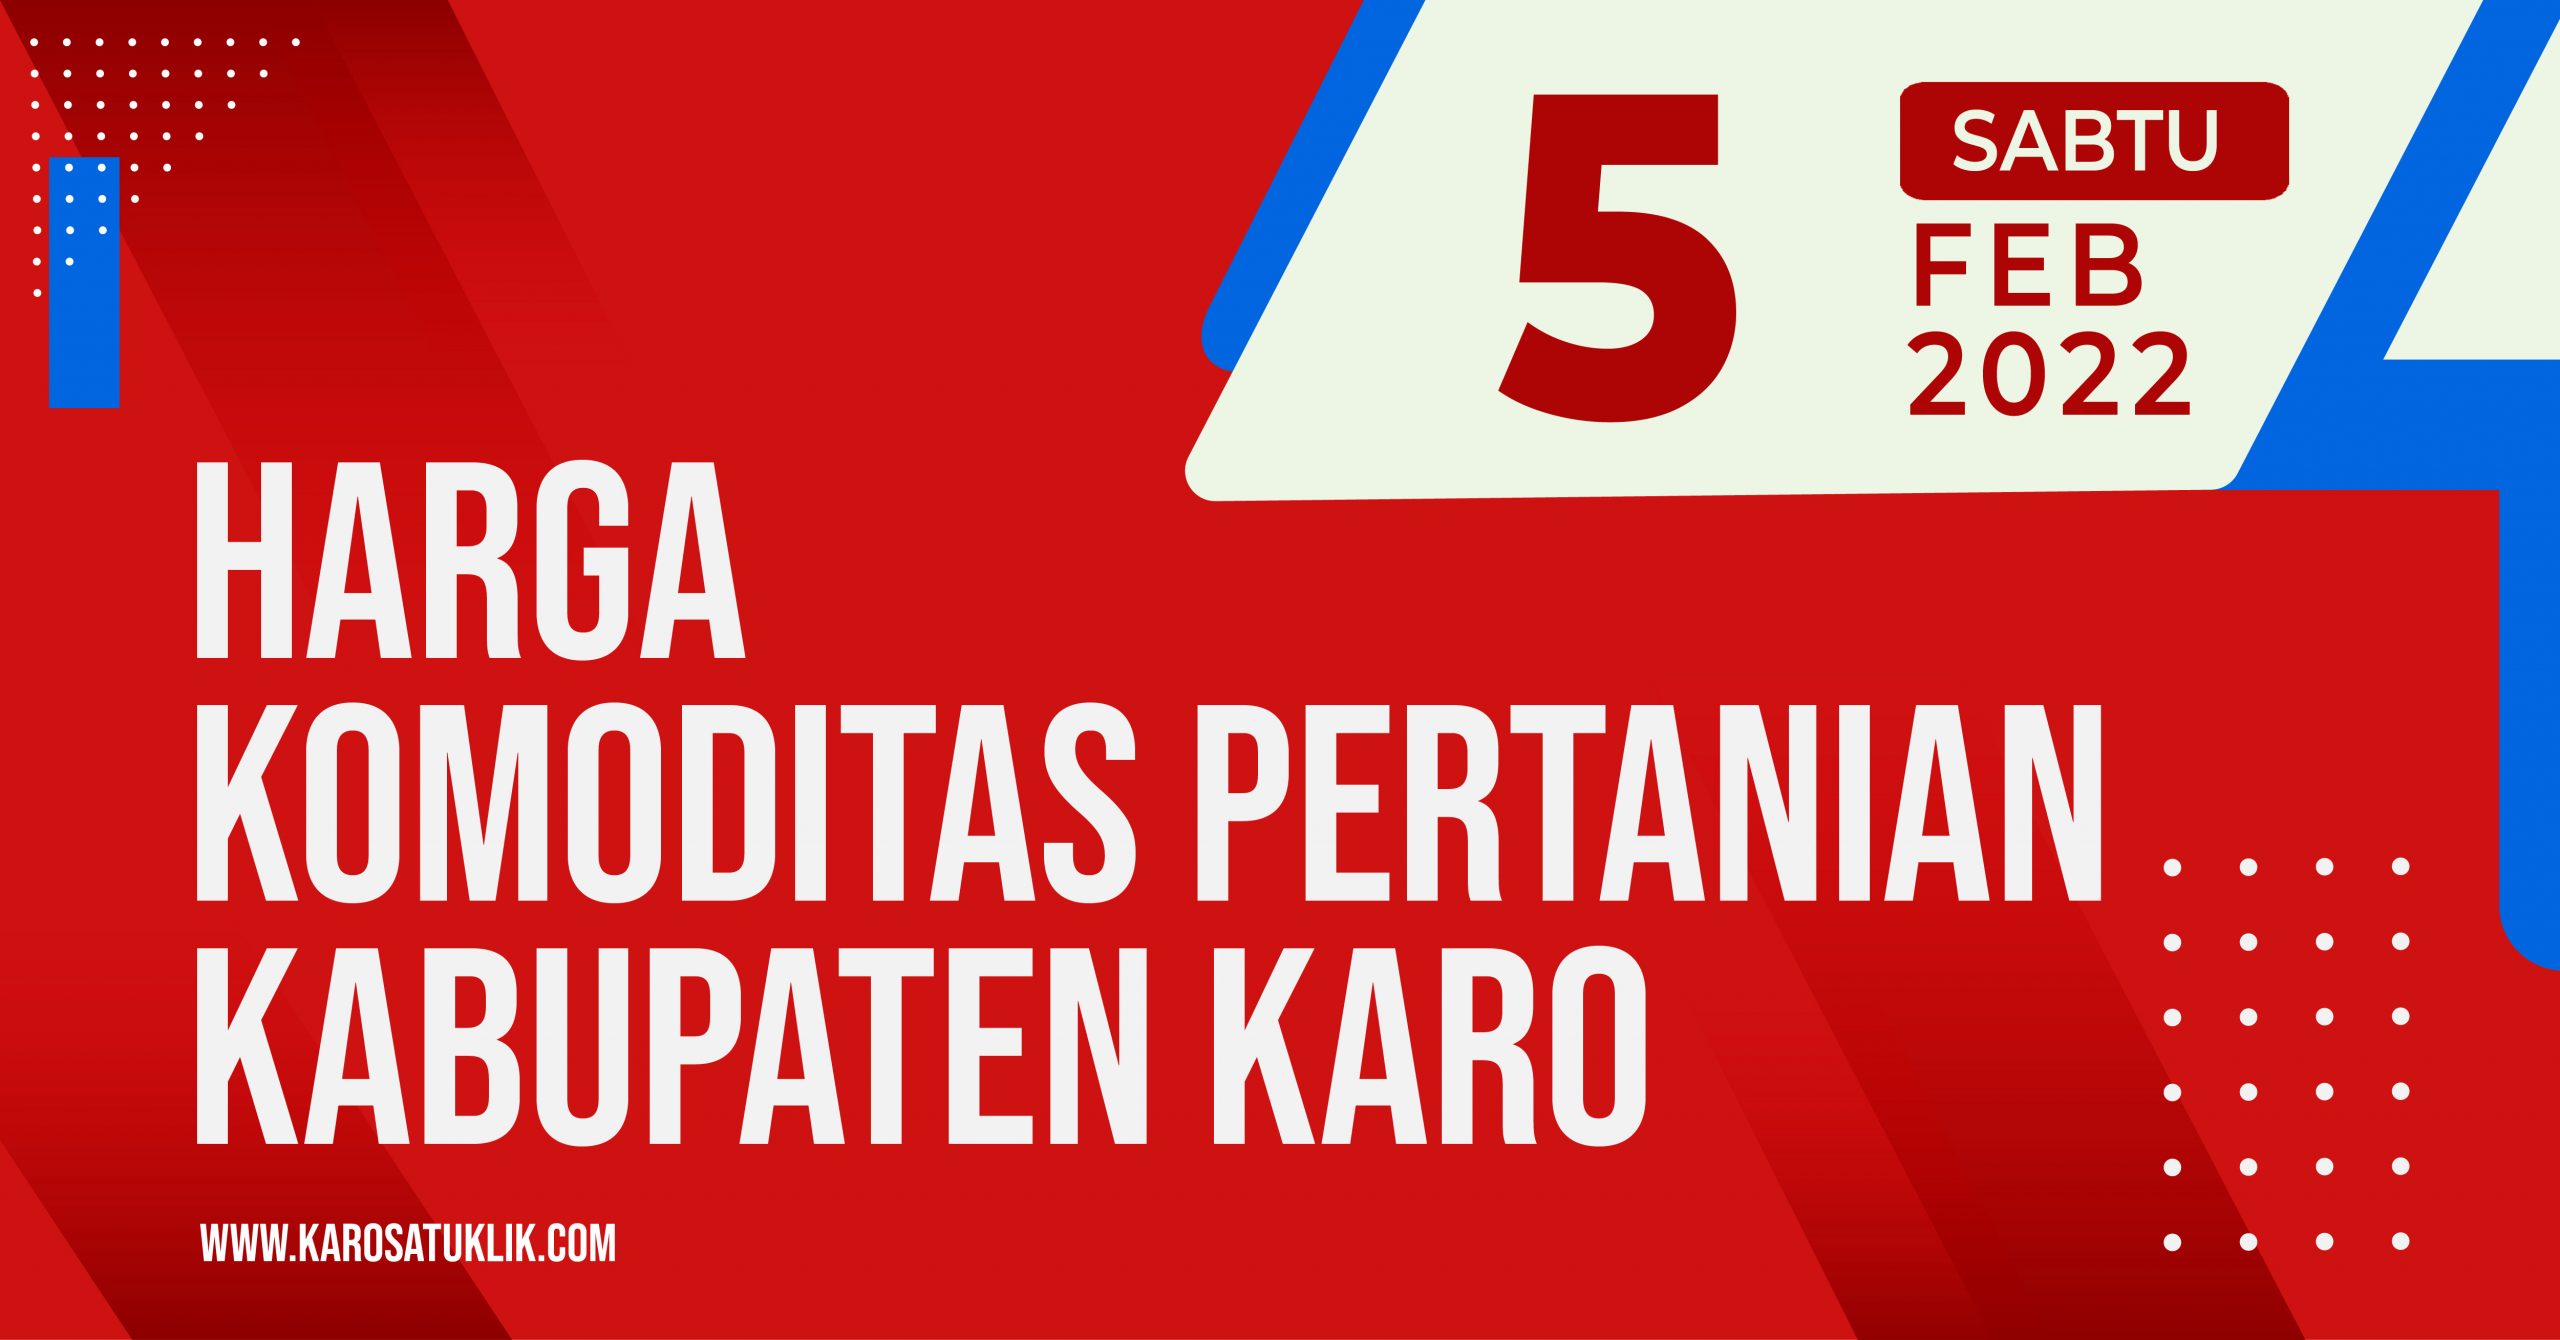 Daftar Harga Komoditas Pertanian Kabupaten Karo, 5 Februari 2022